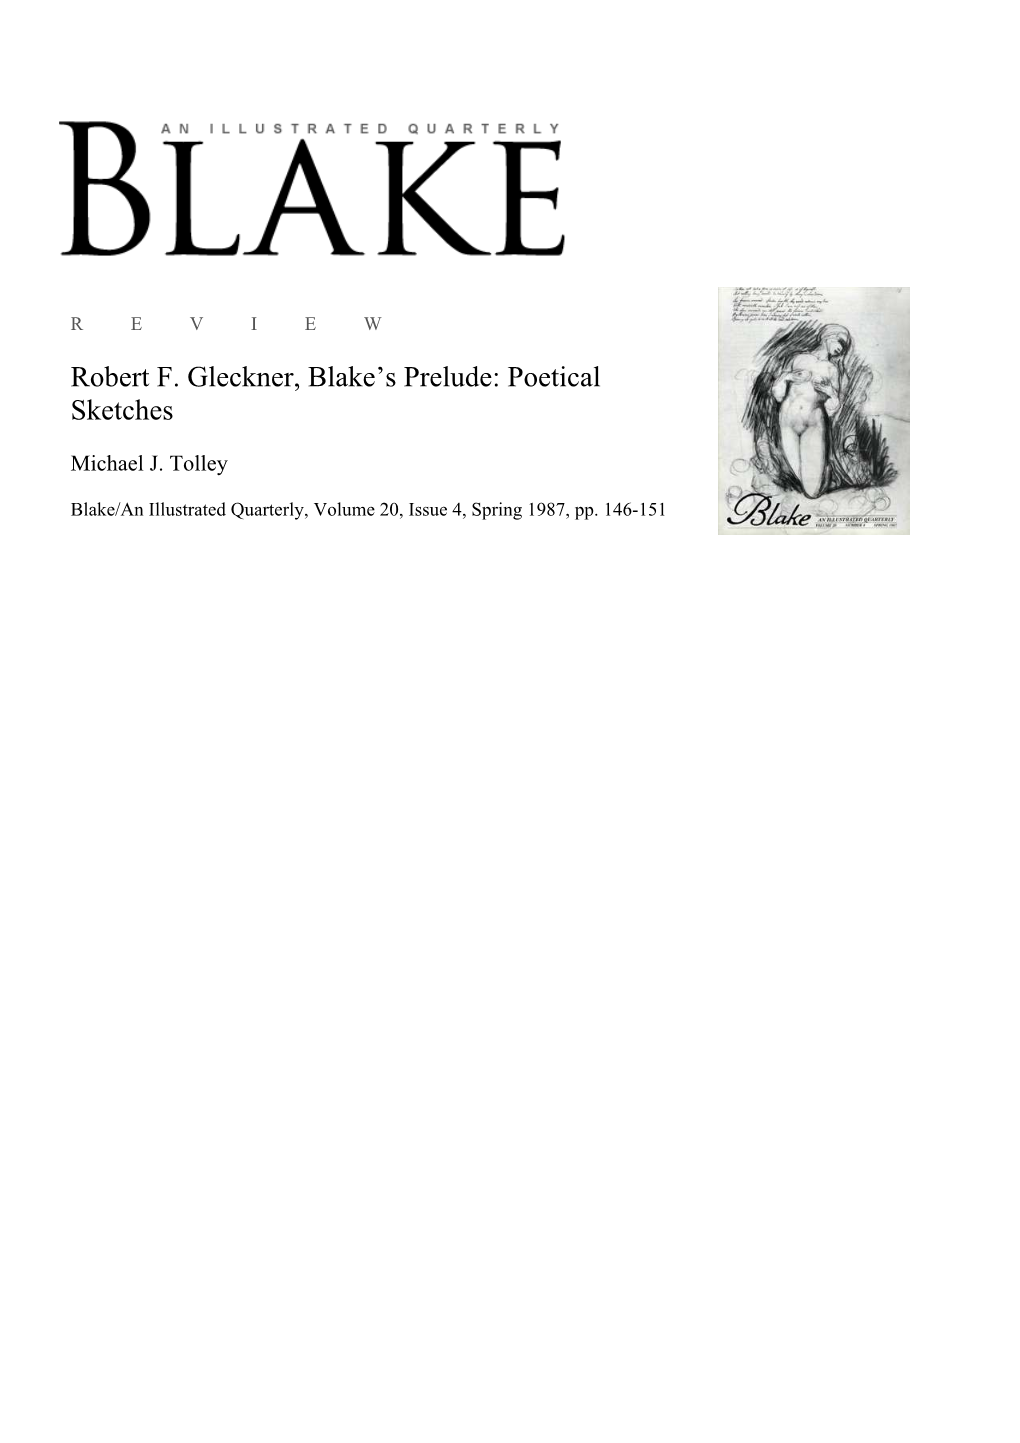 Robert F. Gleckner, Blake's Prelude: Poetical Sketches